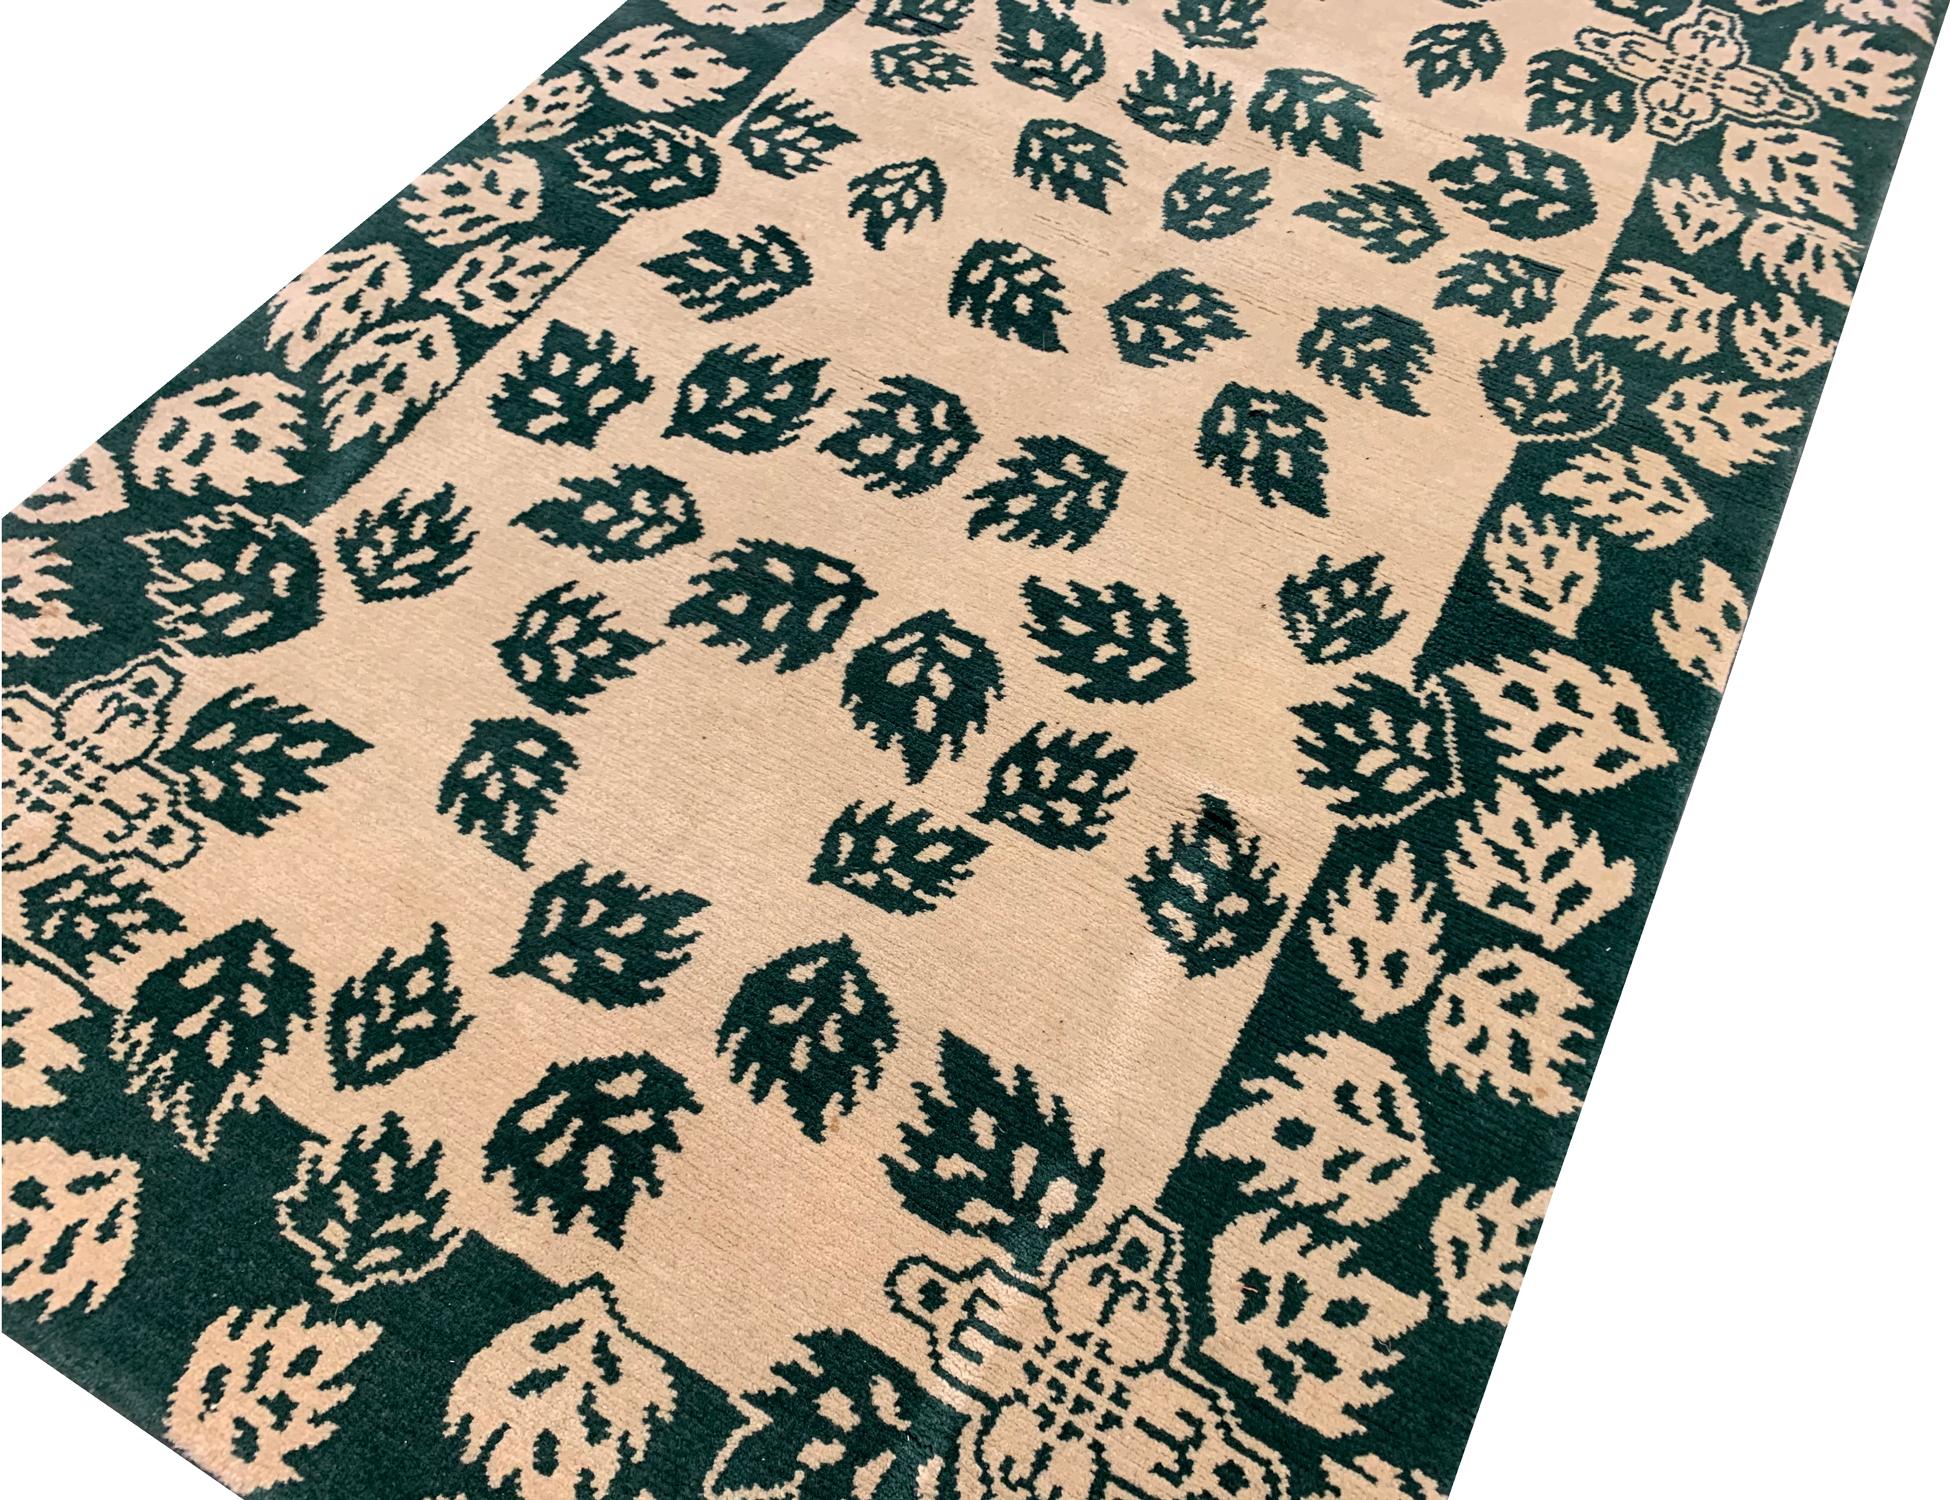 Indian Handmade Carpet Modern Rug Green Cream Wool Area Rug for Home Decor For Sale